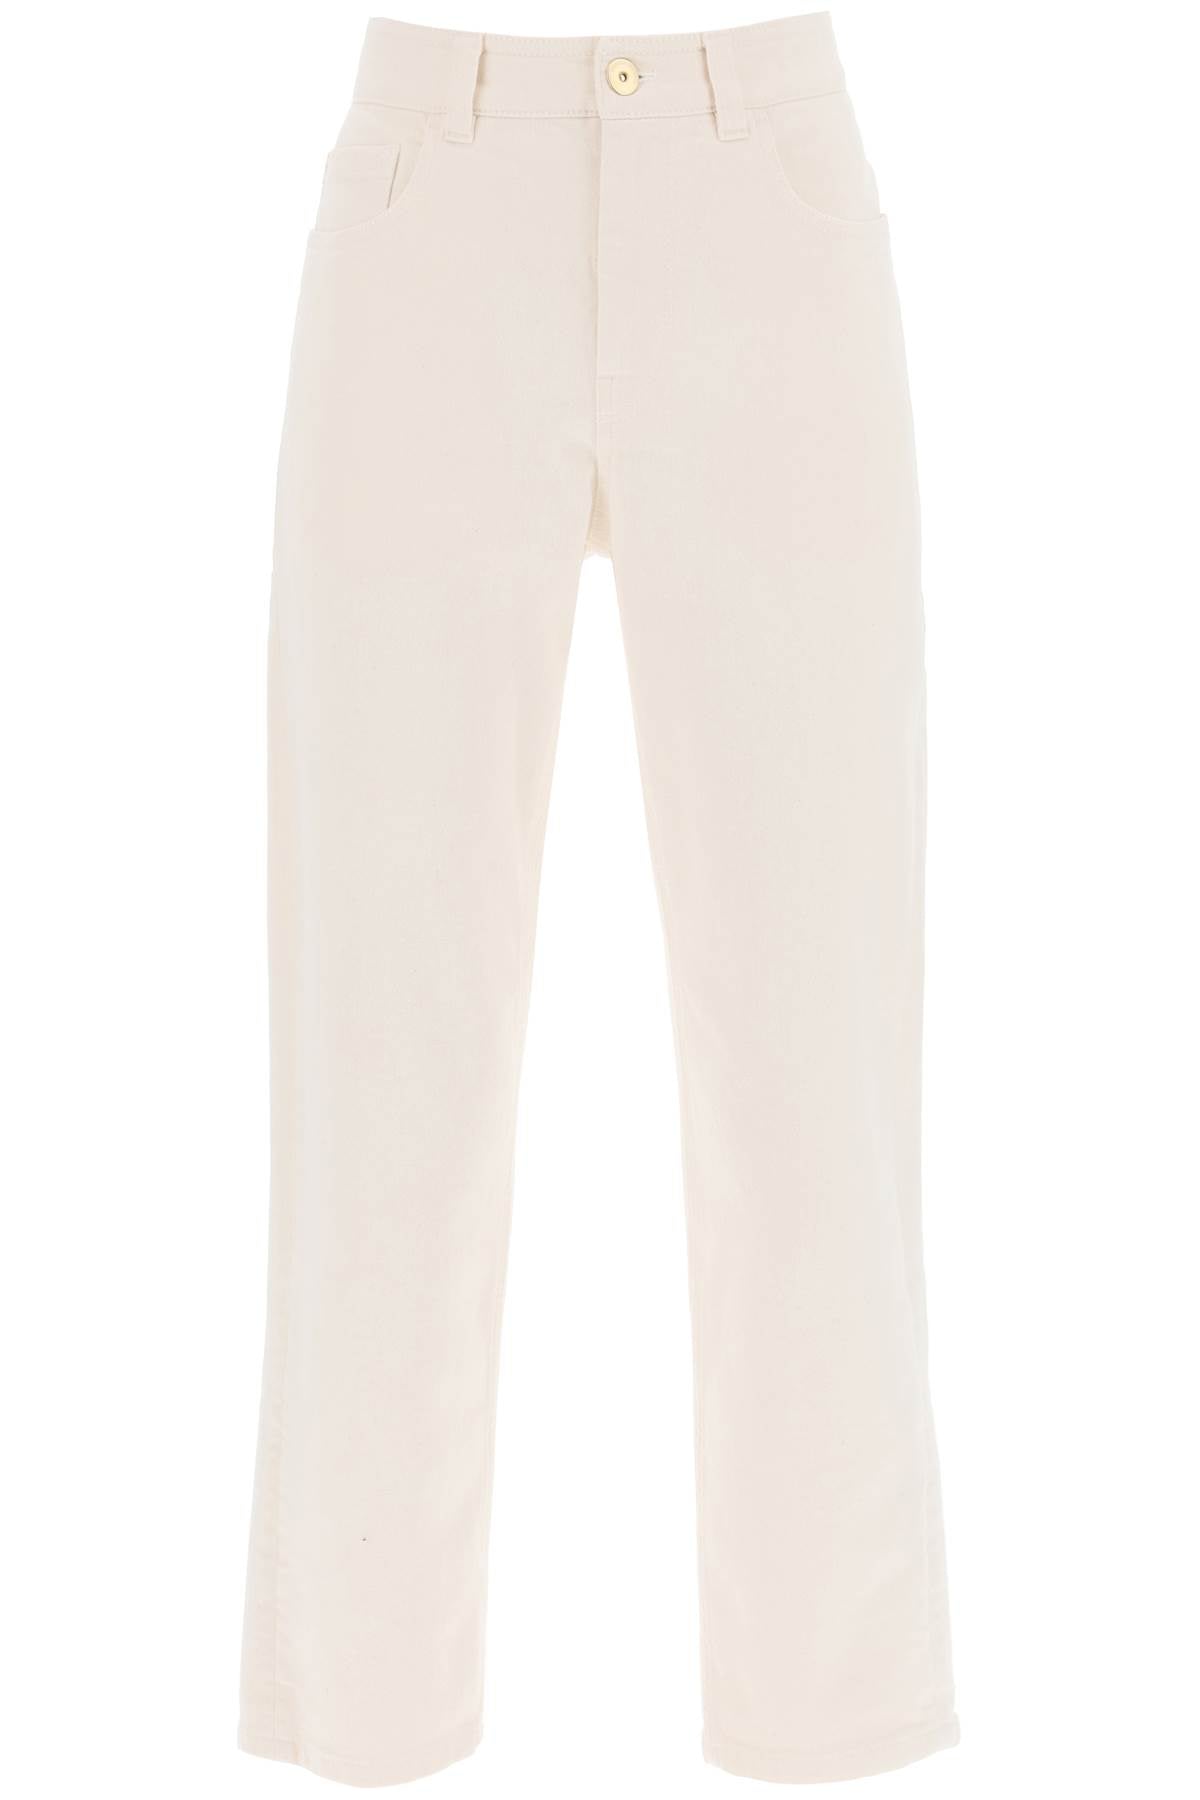 Brunello cucinelli 純棉牛仔褲適合日常穿著。 MB057P5732 ECRU